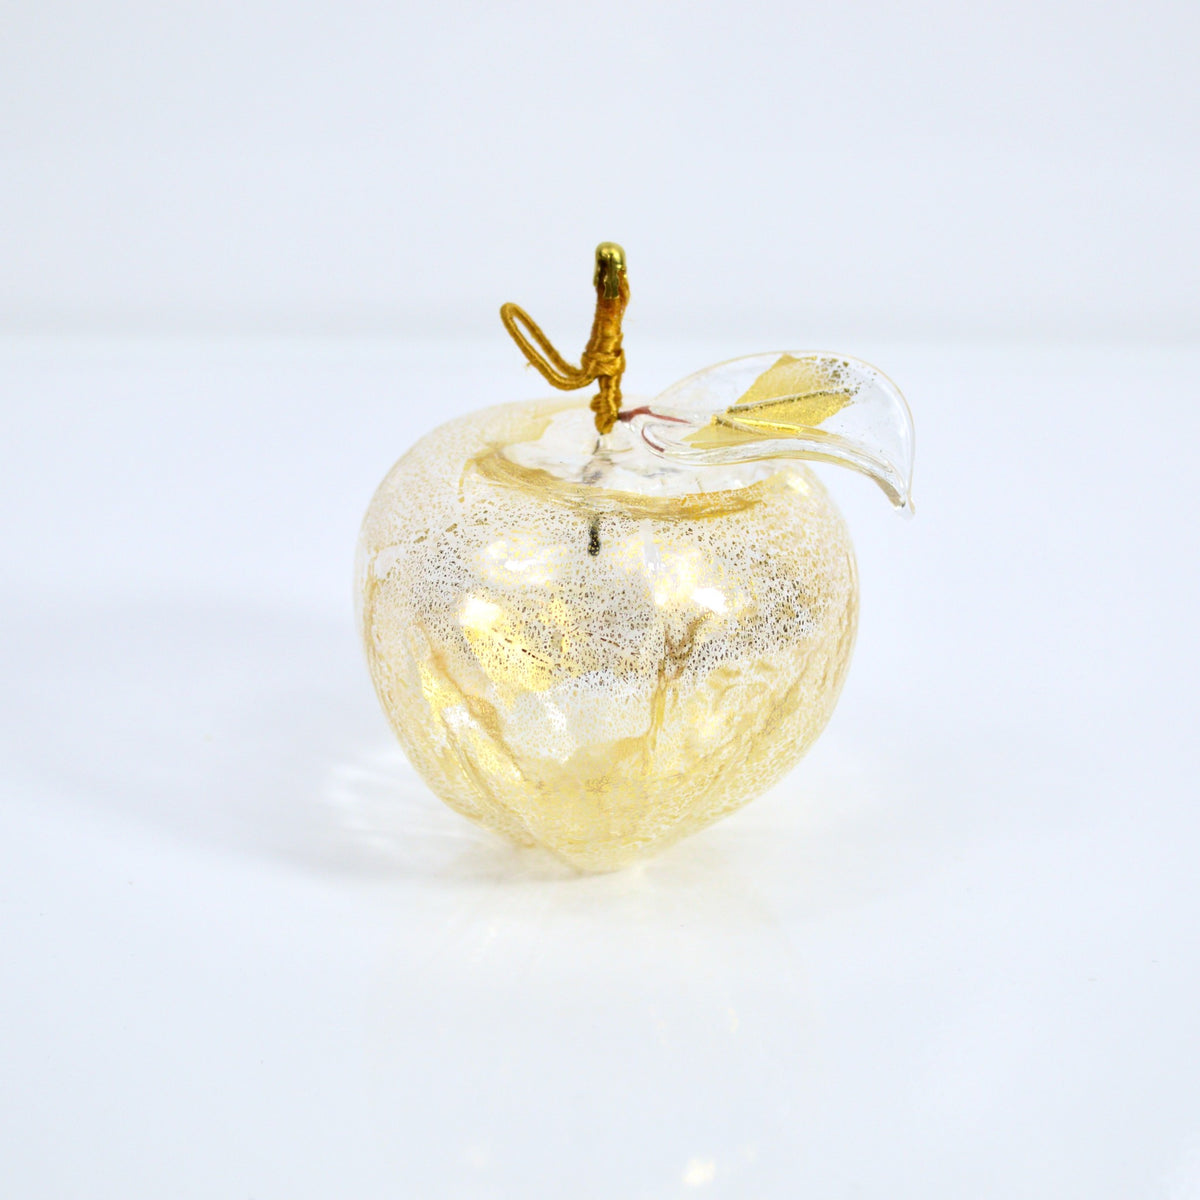 Murano Blown Glass Apple, 24k Gold Foil, Hand Blown in Italy - My Italian Decor